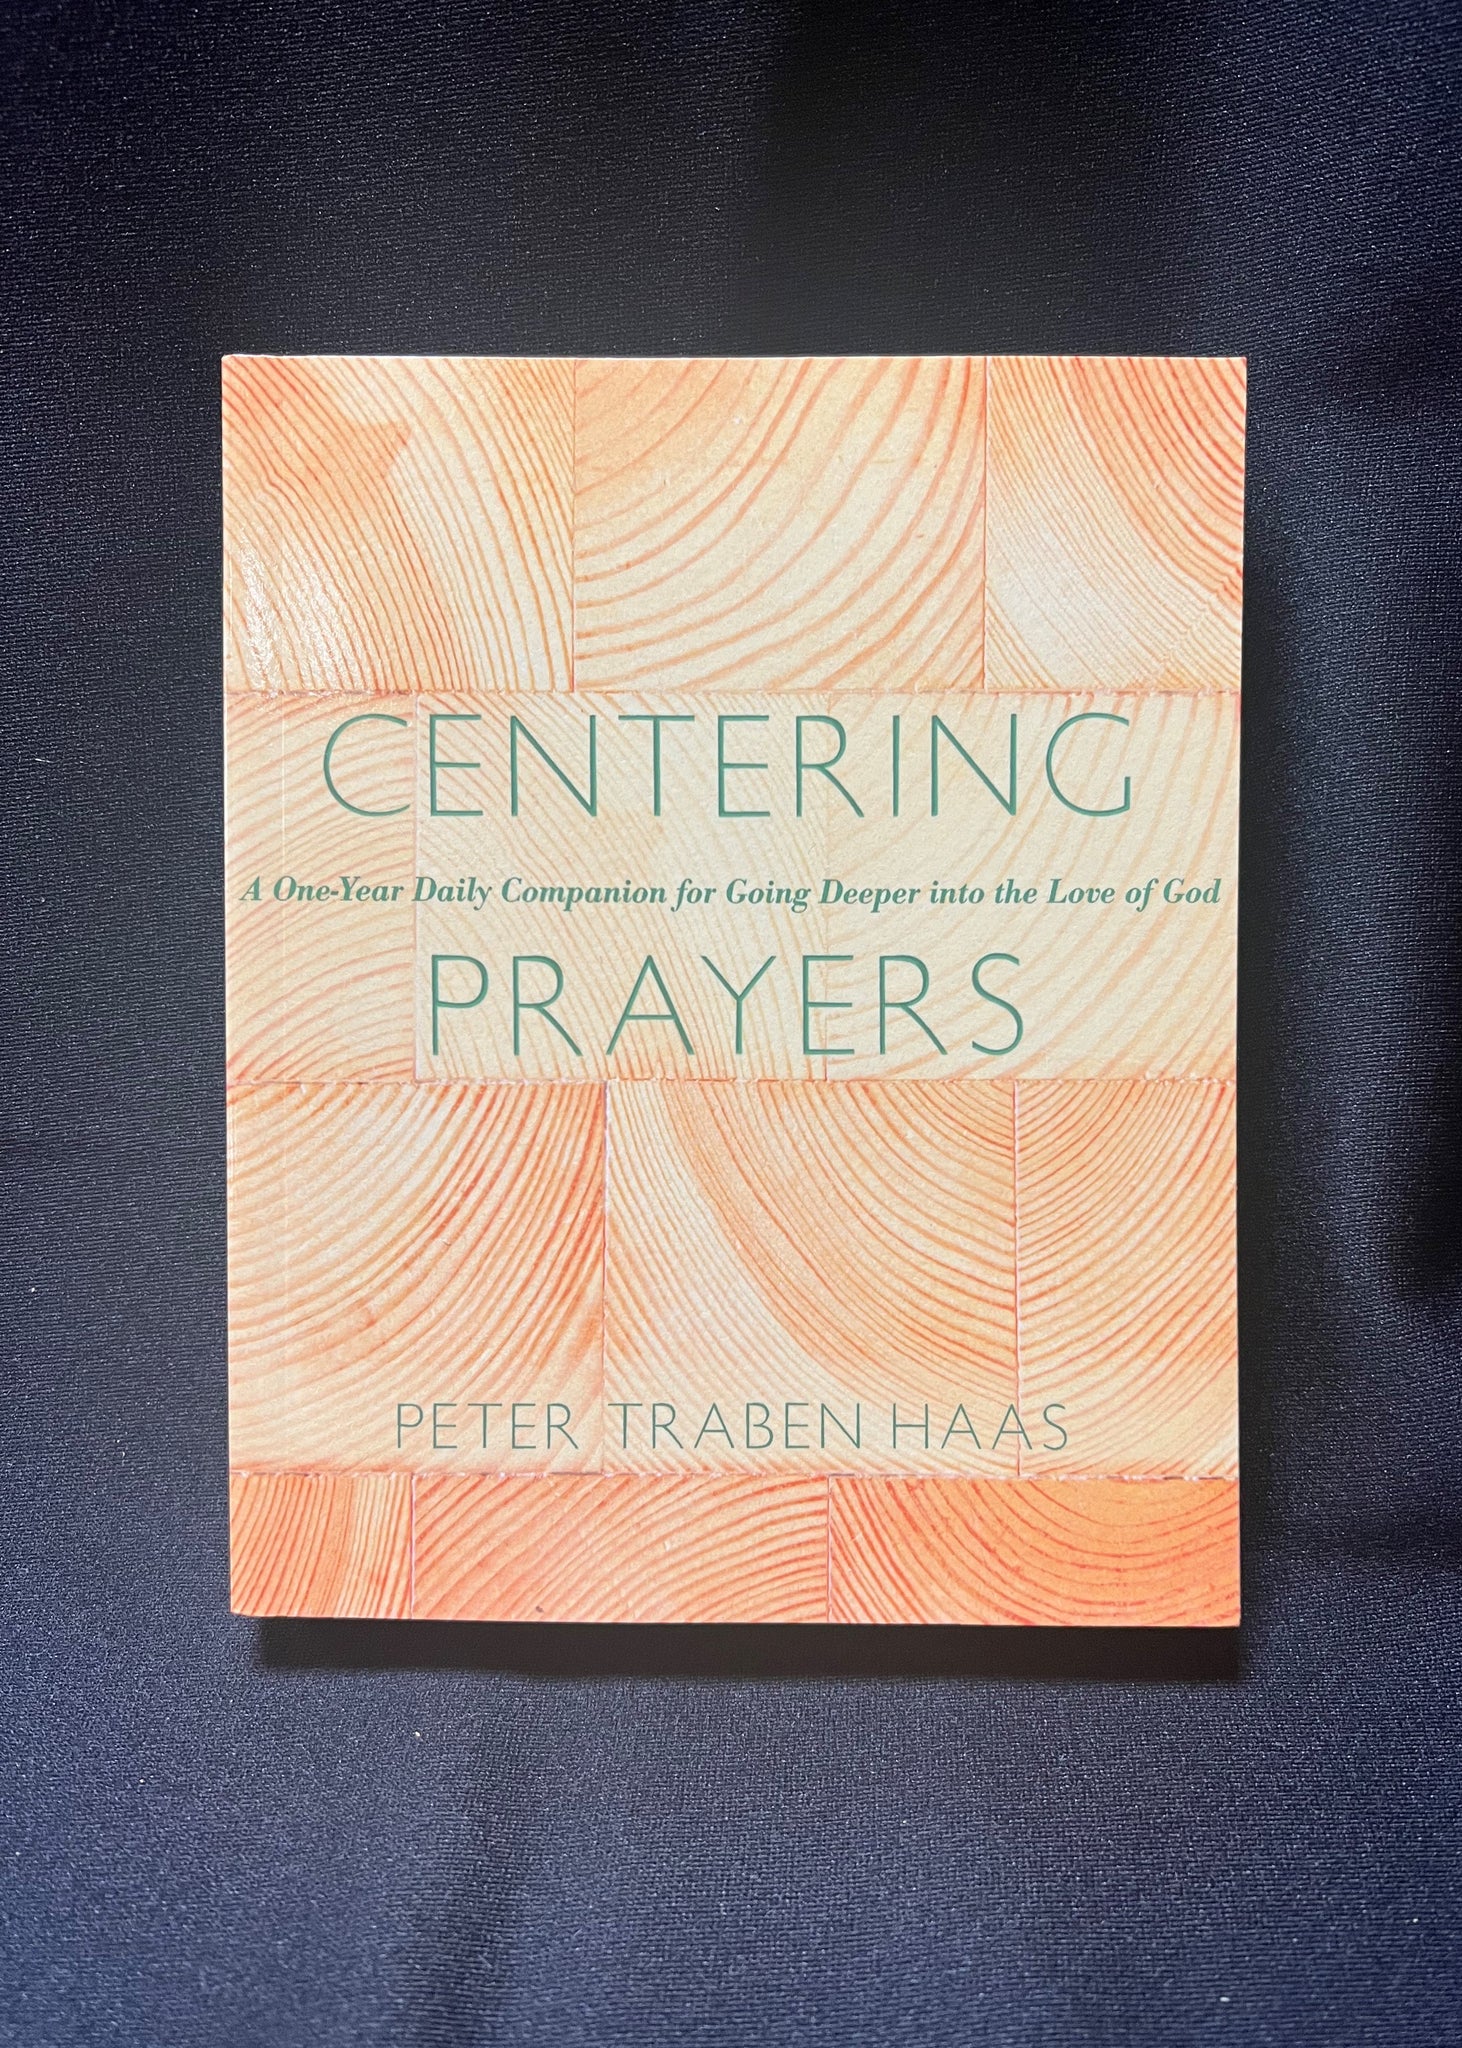 Centering Prayers